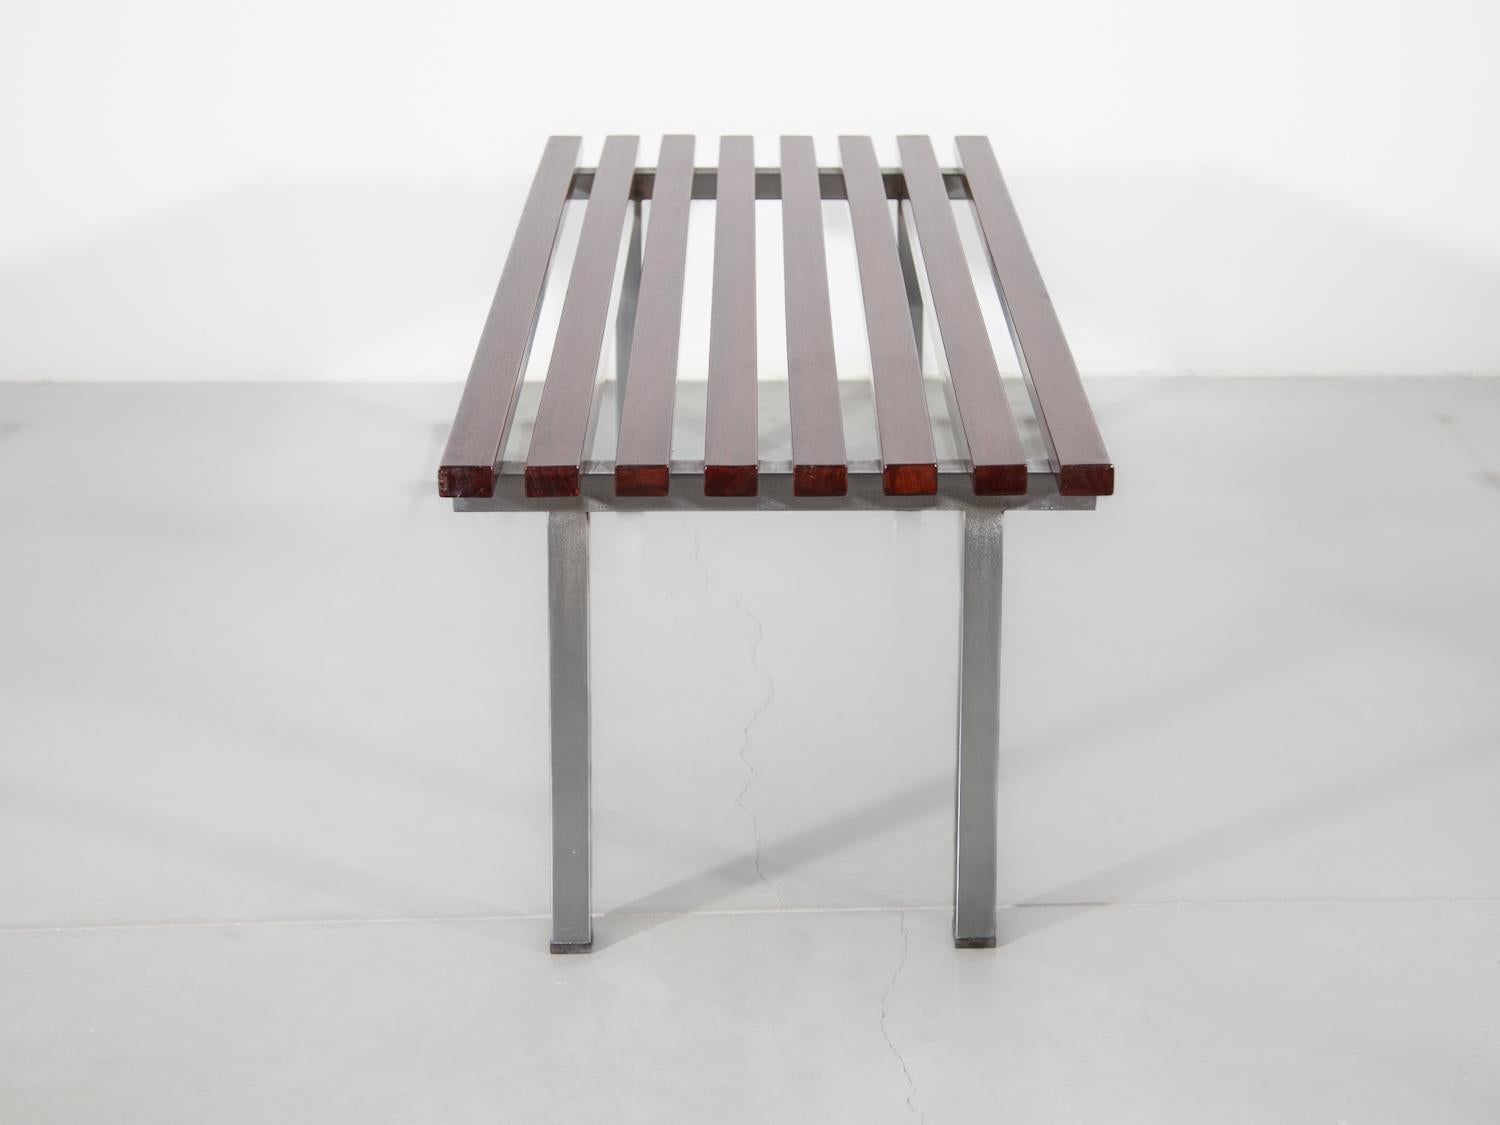 Stainless Steel Minimalist Alfred Hendrickx Slatted Bench, 1960s, Belgium Design For Sale